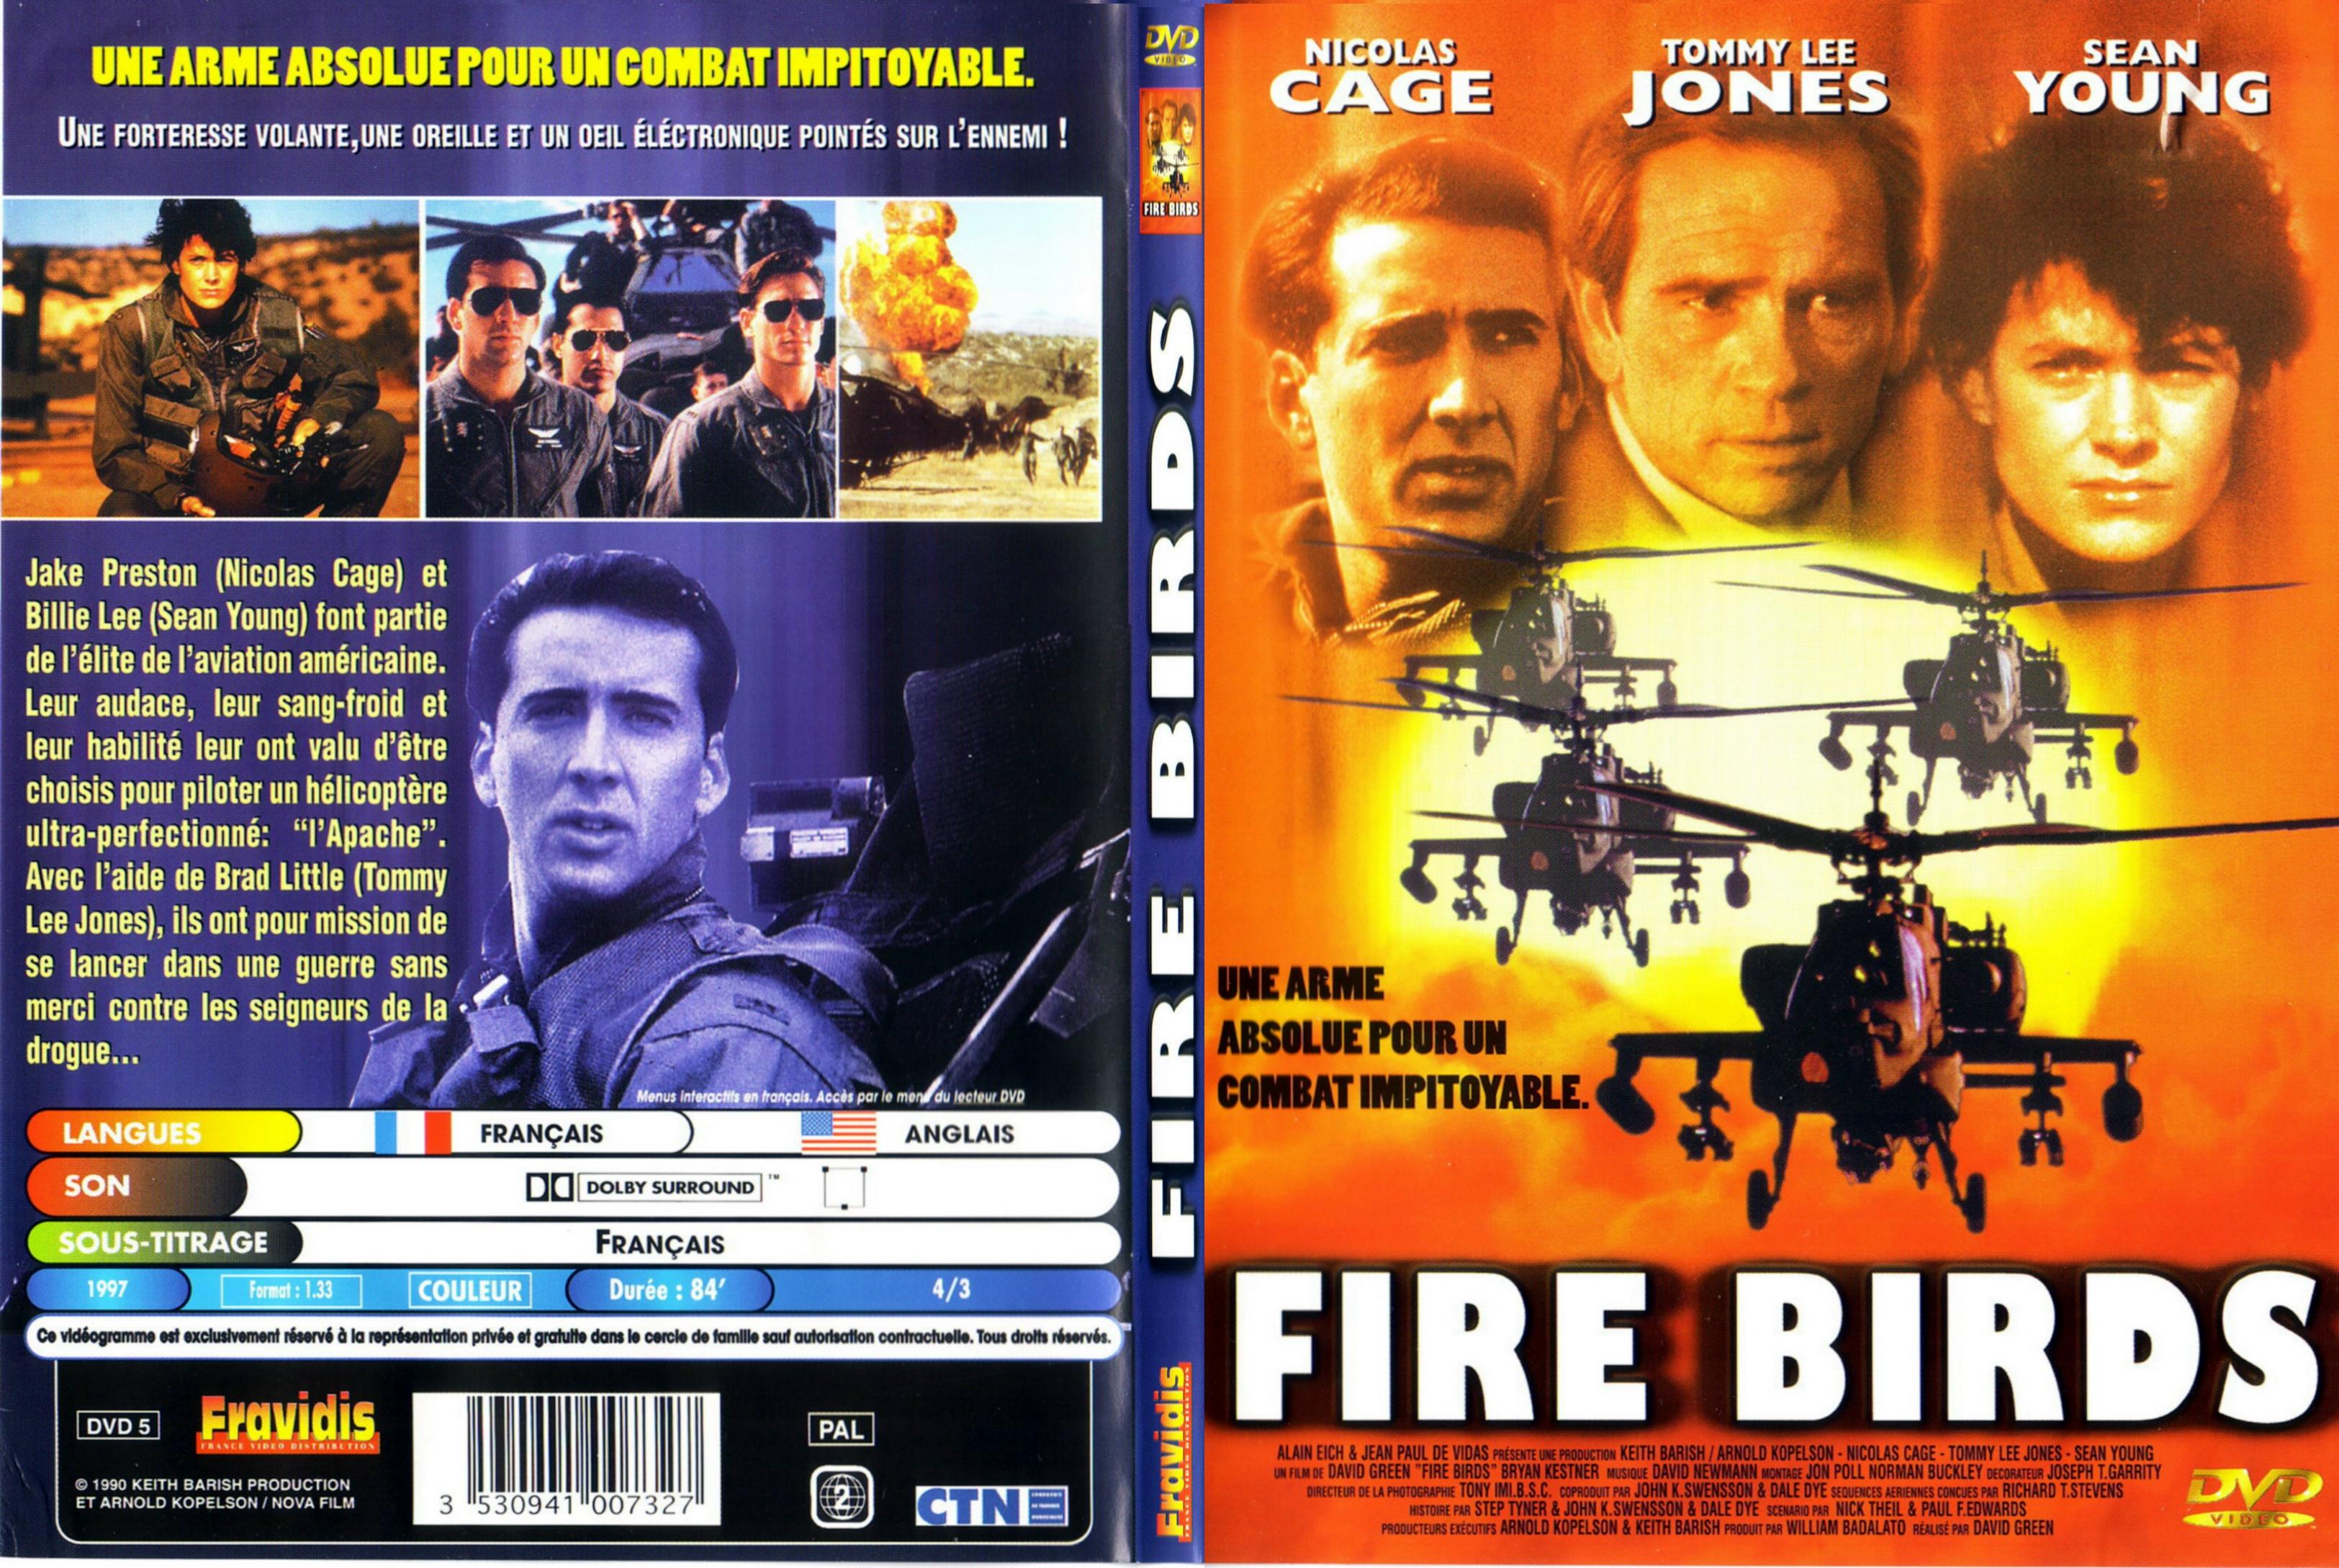 Jaquette DVD Fire birds - SLIM